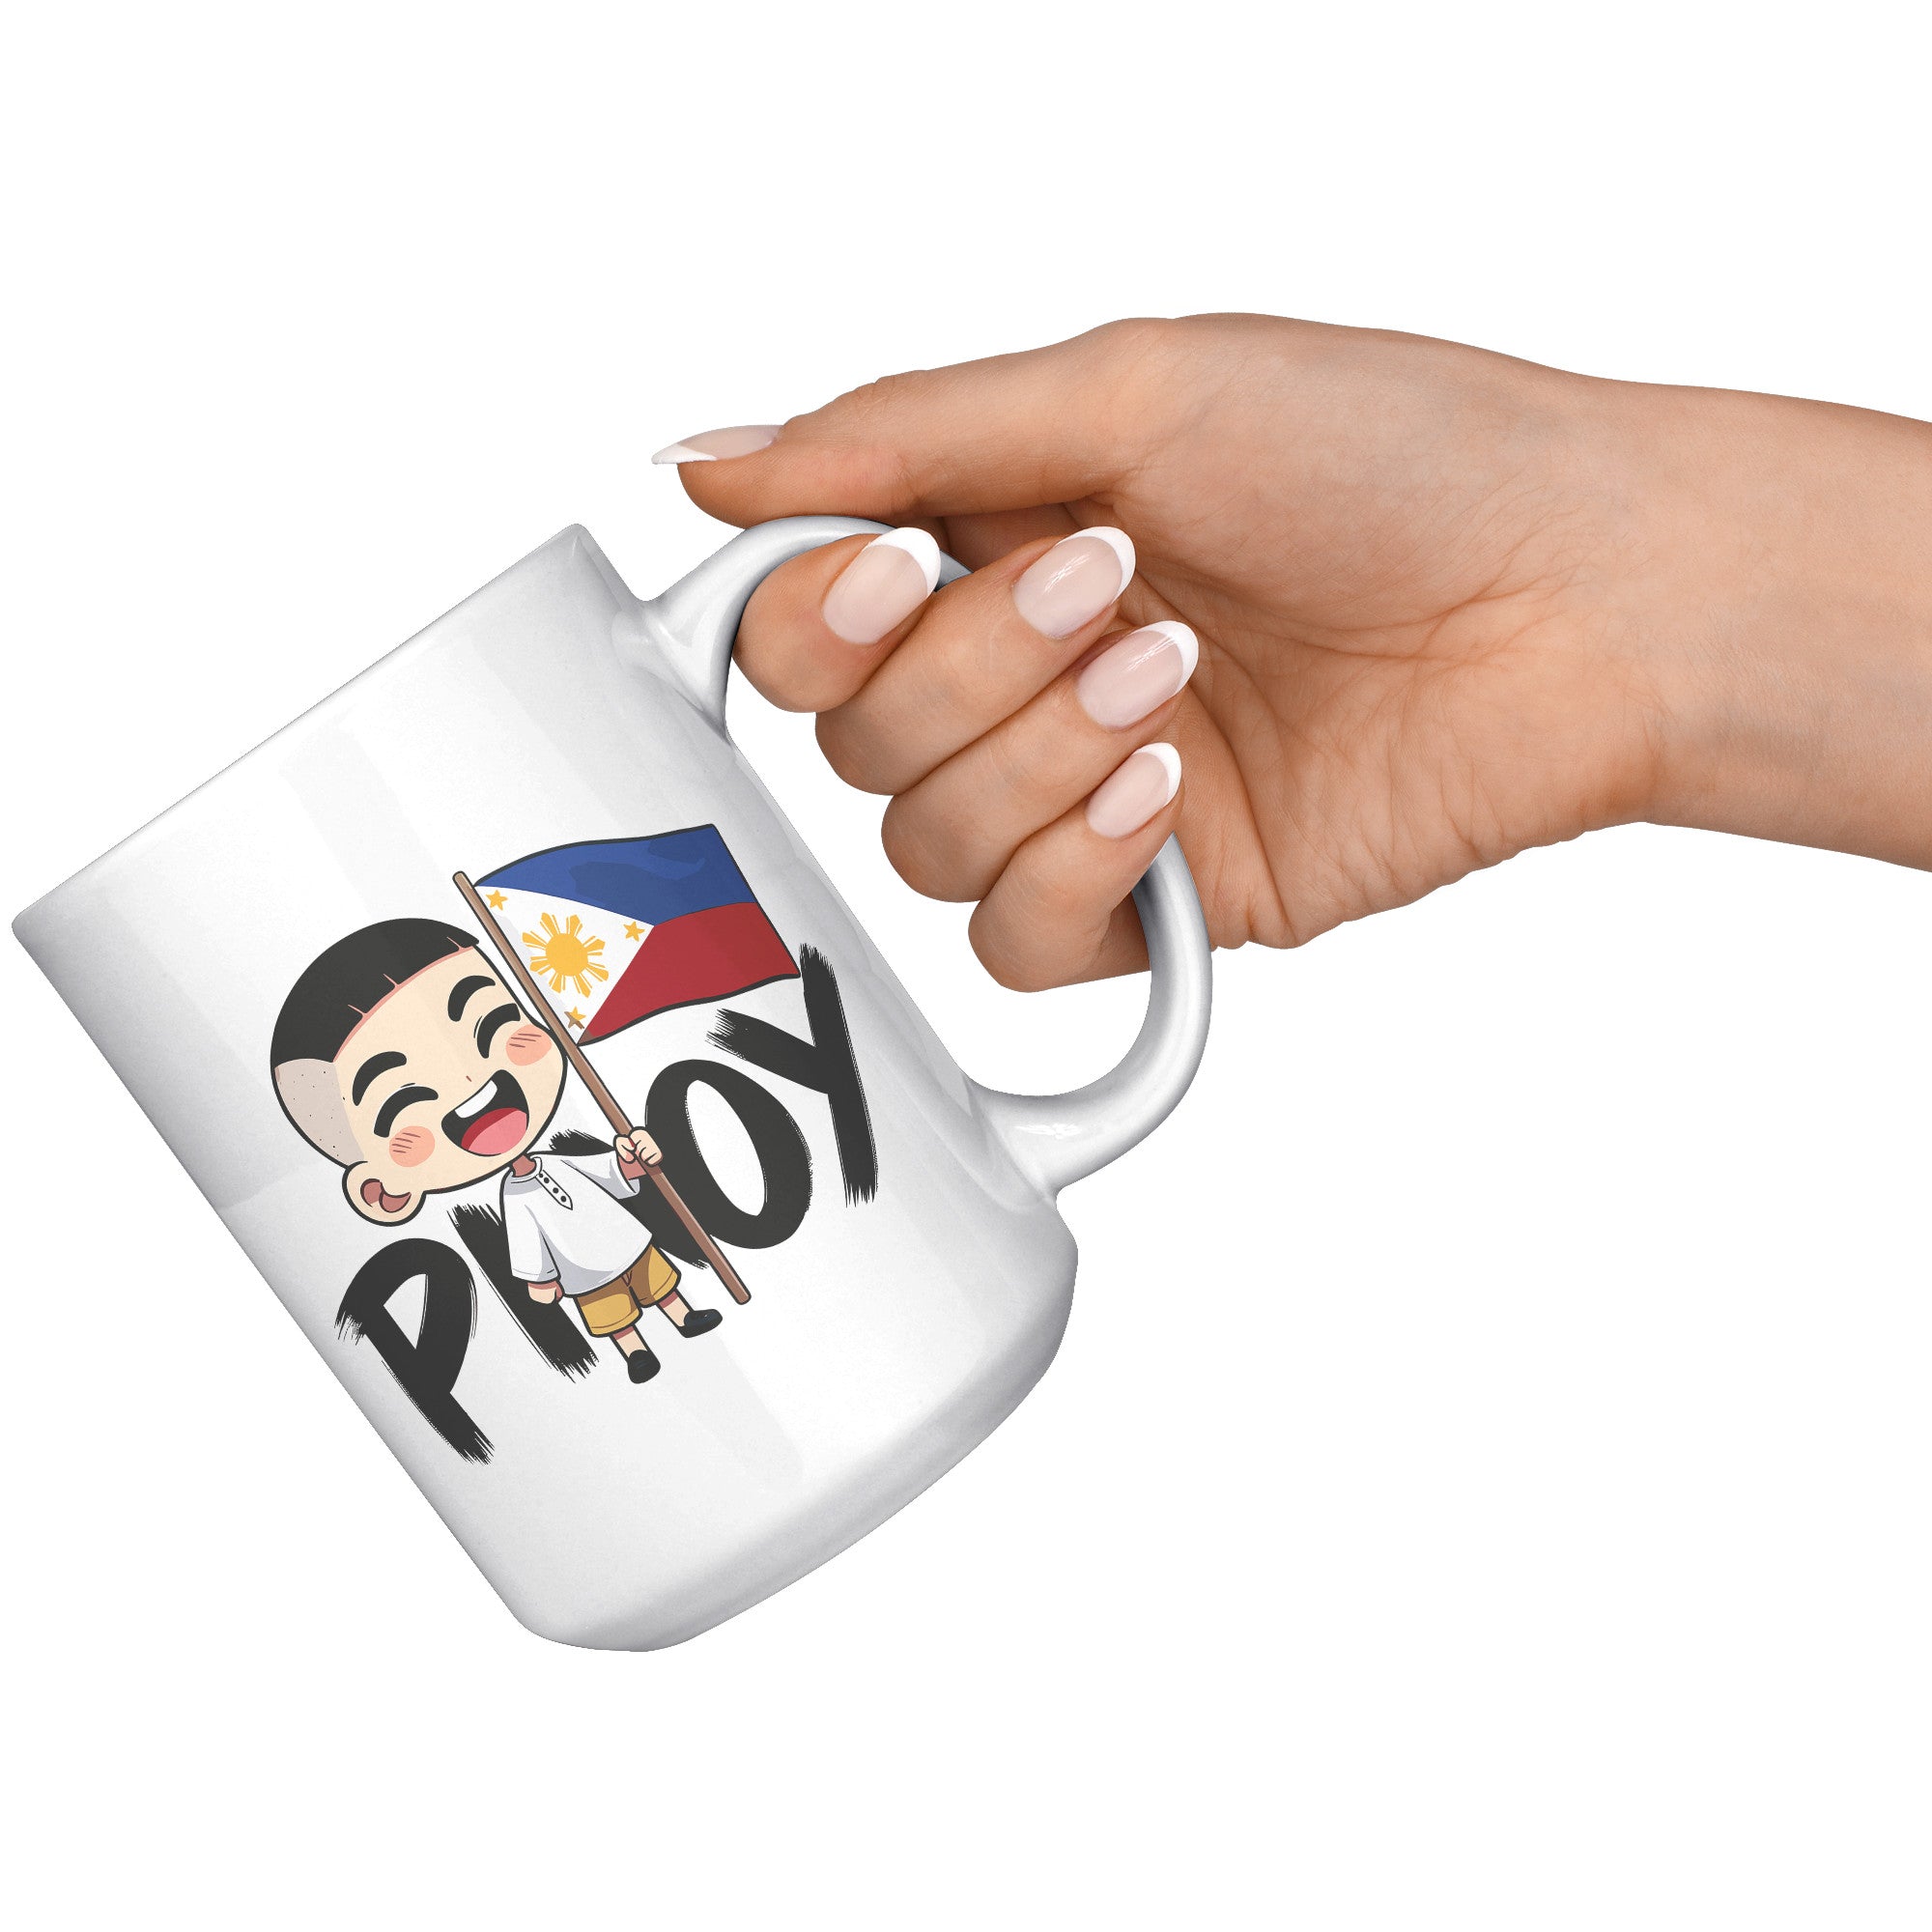 "Cute Cartoon Filipino Pride Coffee Mug - Vibrant Pinoy Pride Cup - Perfect Gift for Filipinos - Colorful Philippines Heritage Mug" - R1